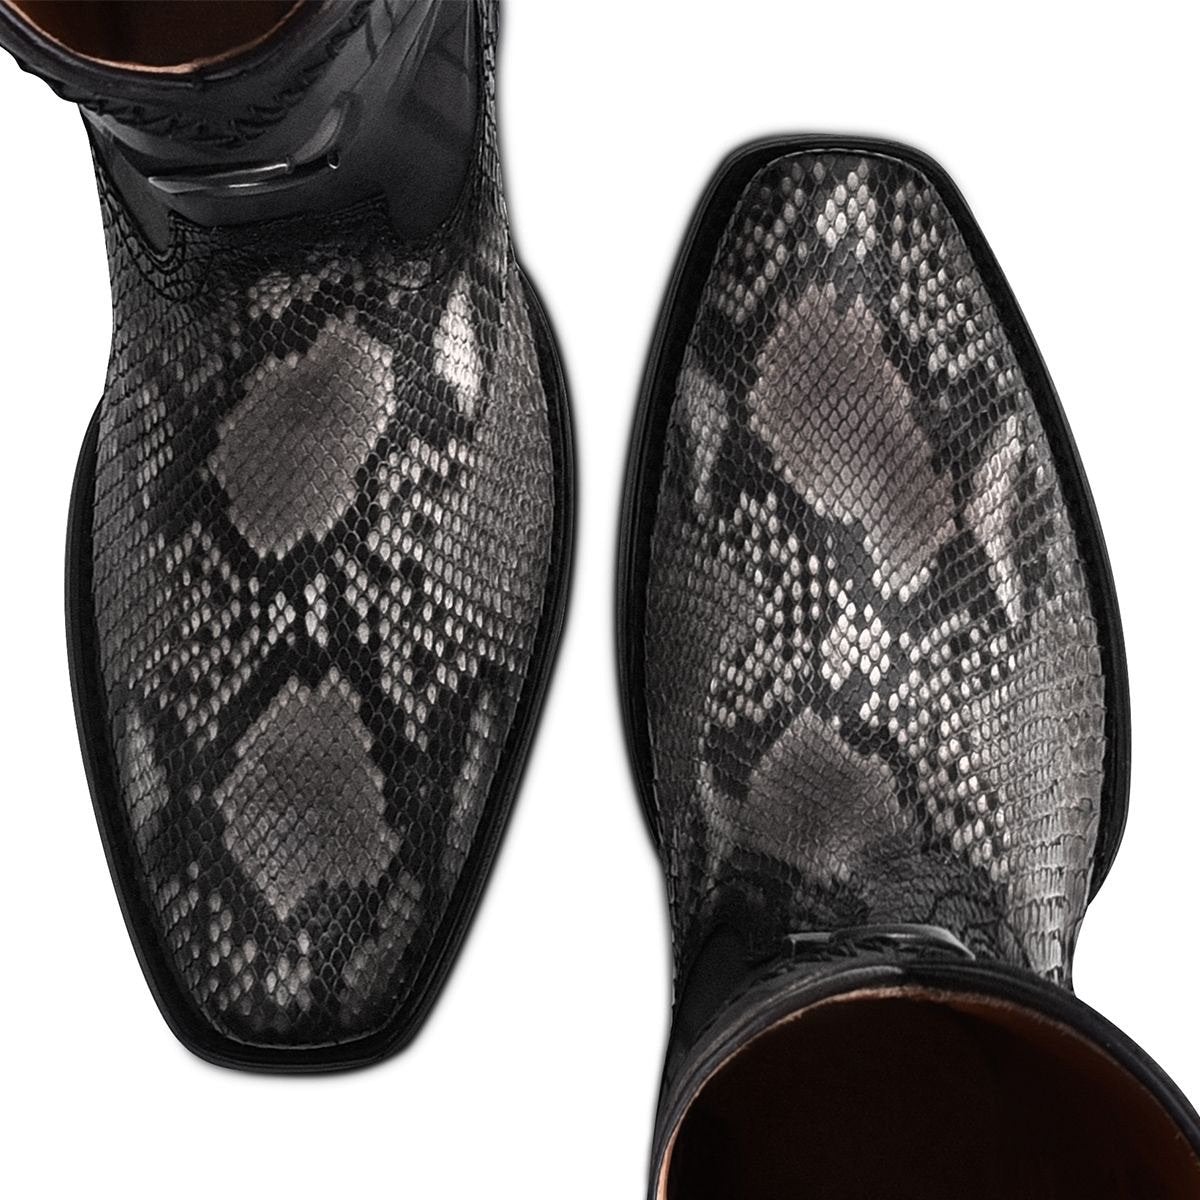 1J2FPH - Cuadra black dress cowboy python leather boots for men-Kuet.us